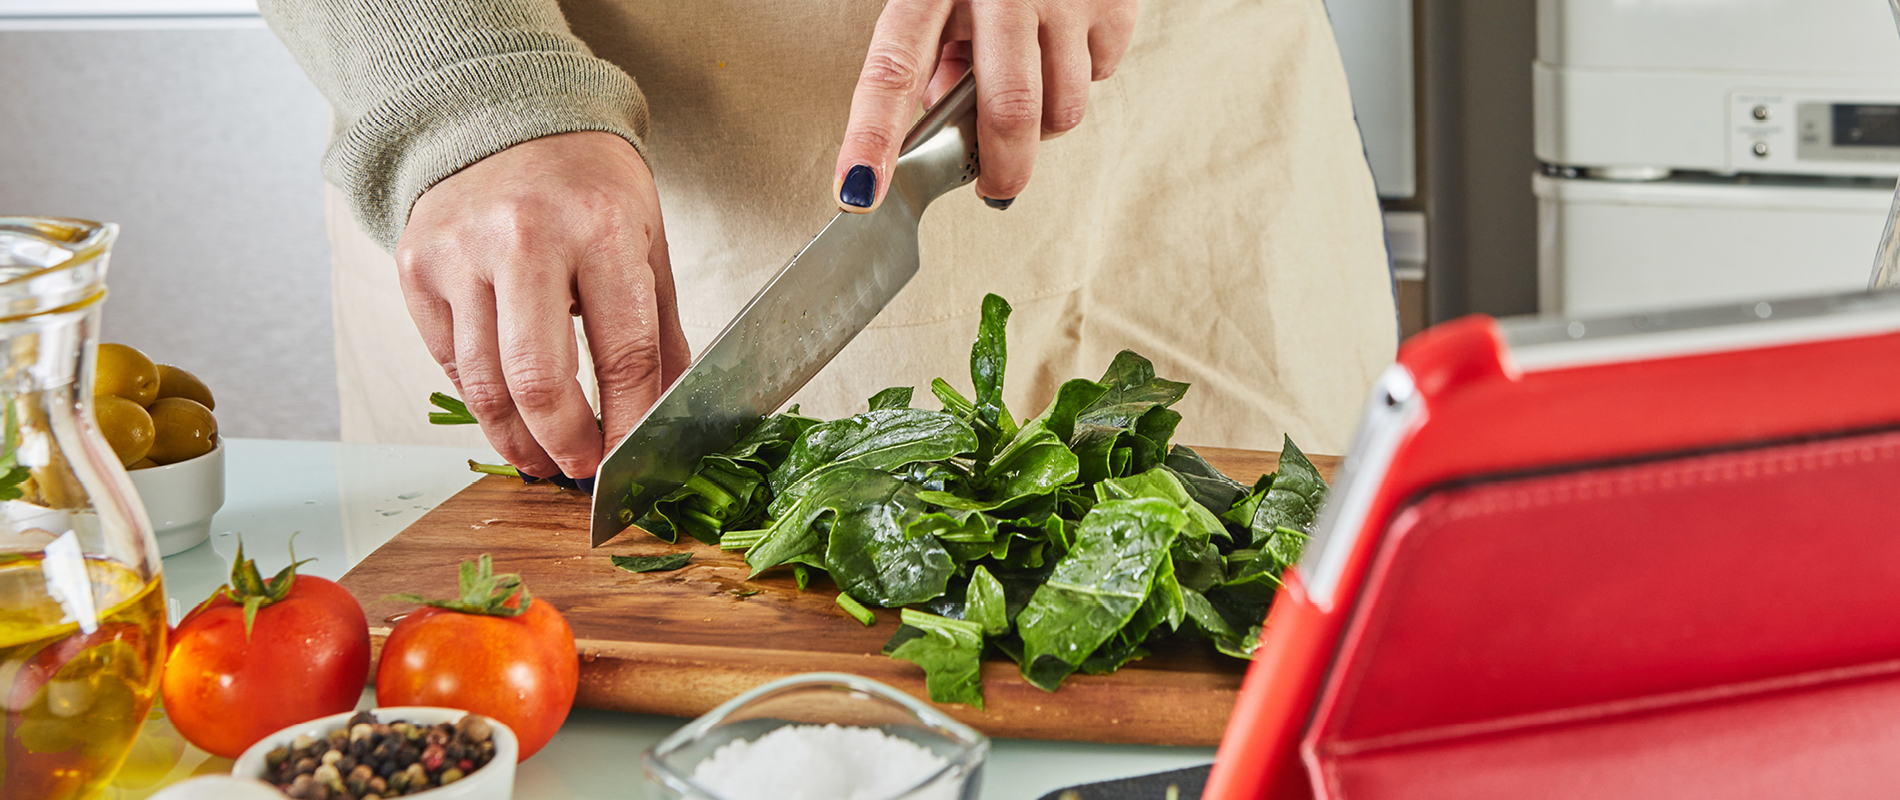 Chopping spinach on cutting board